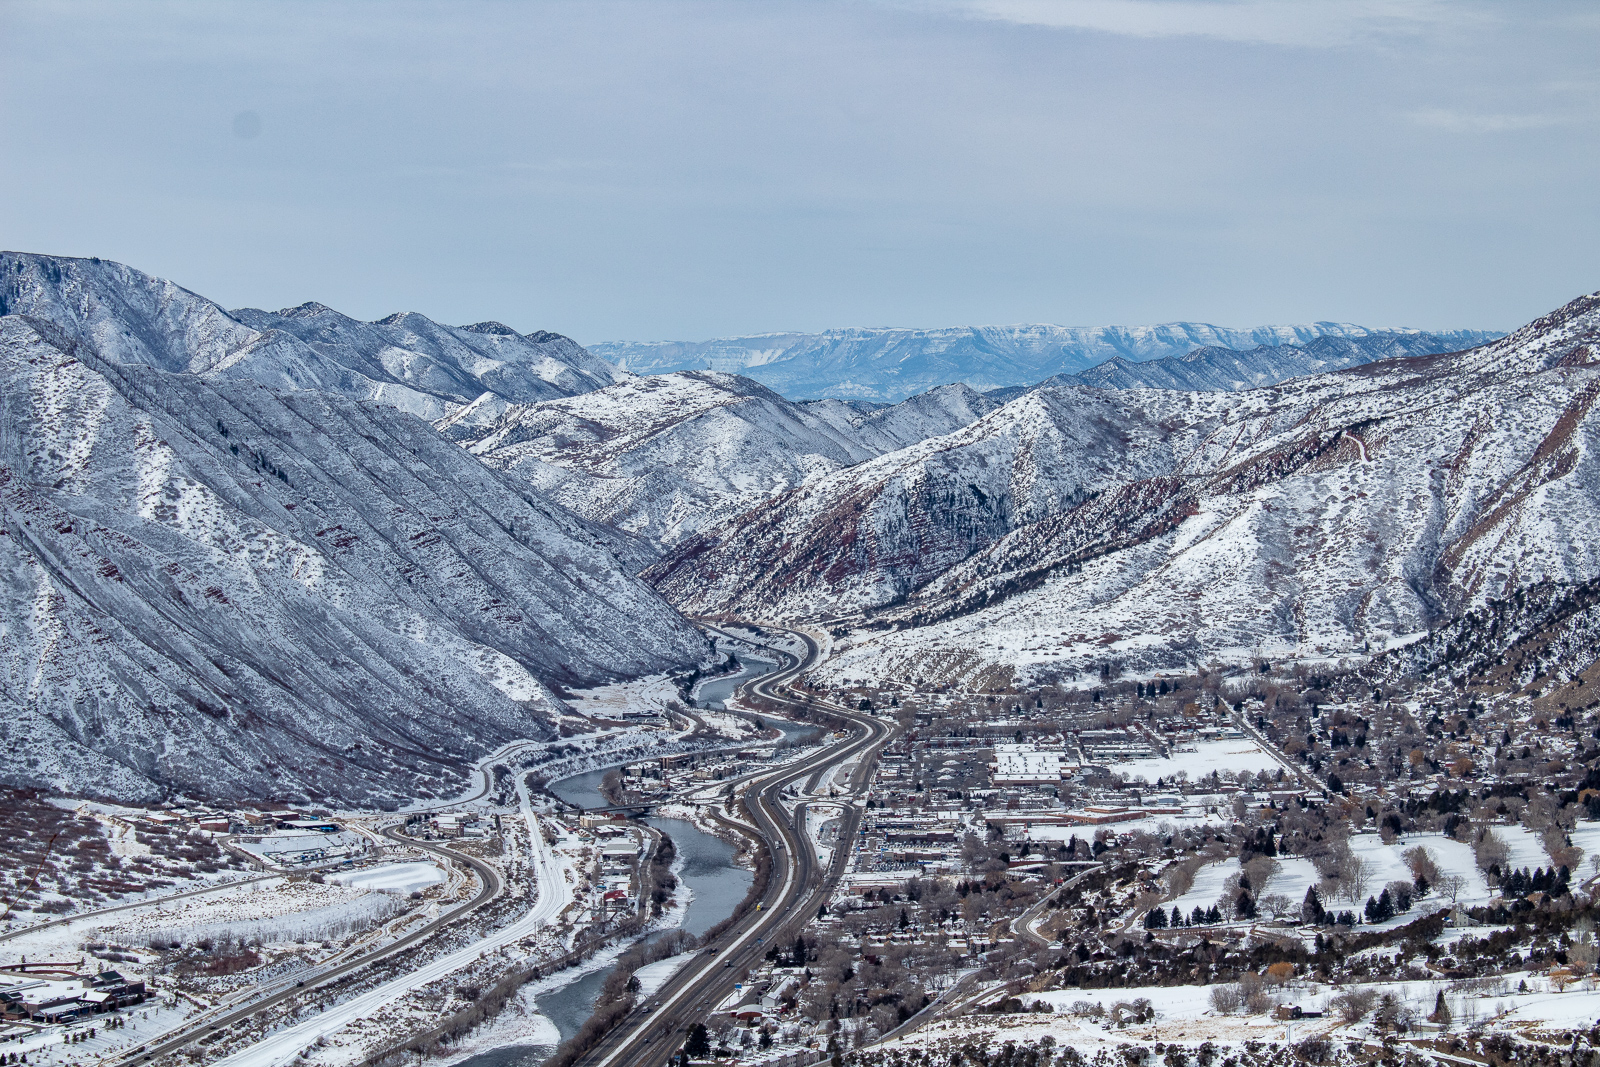 Glenwood Springs Colorado in the winter